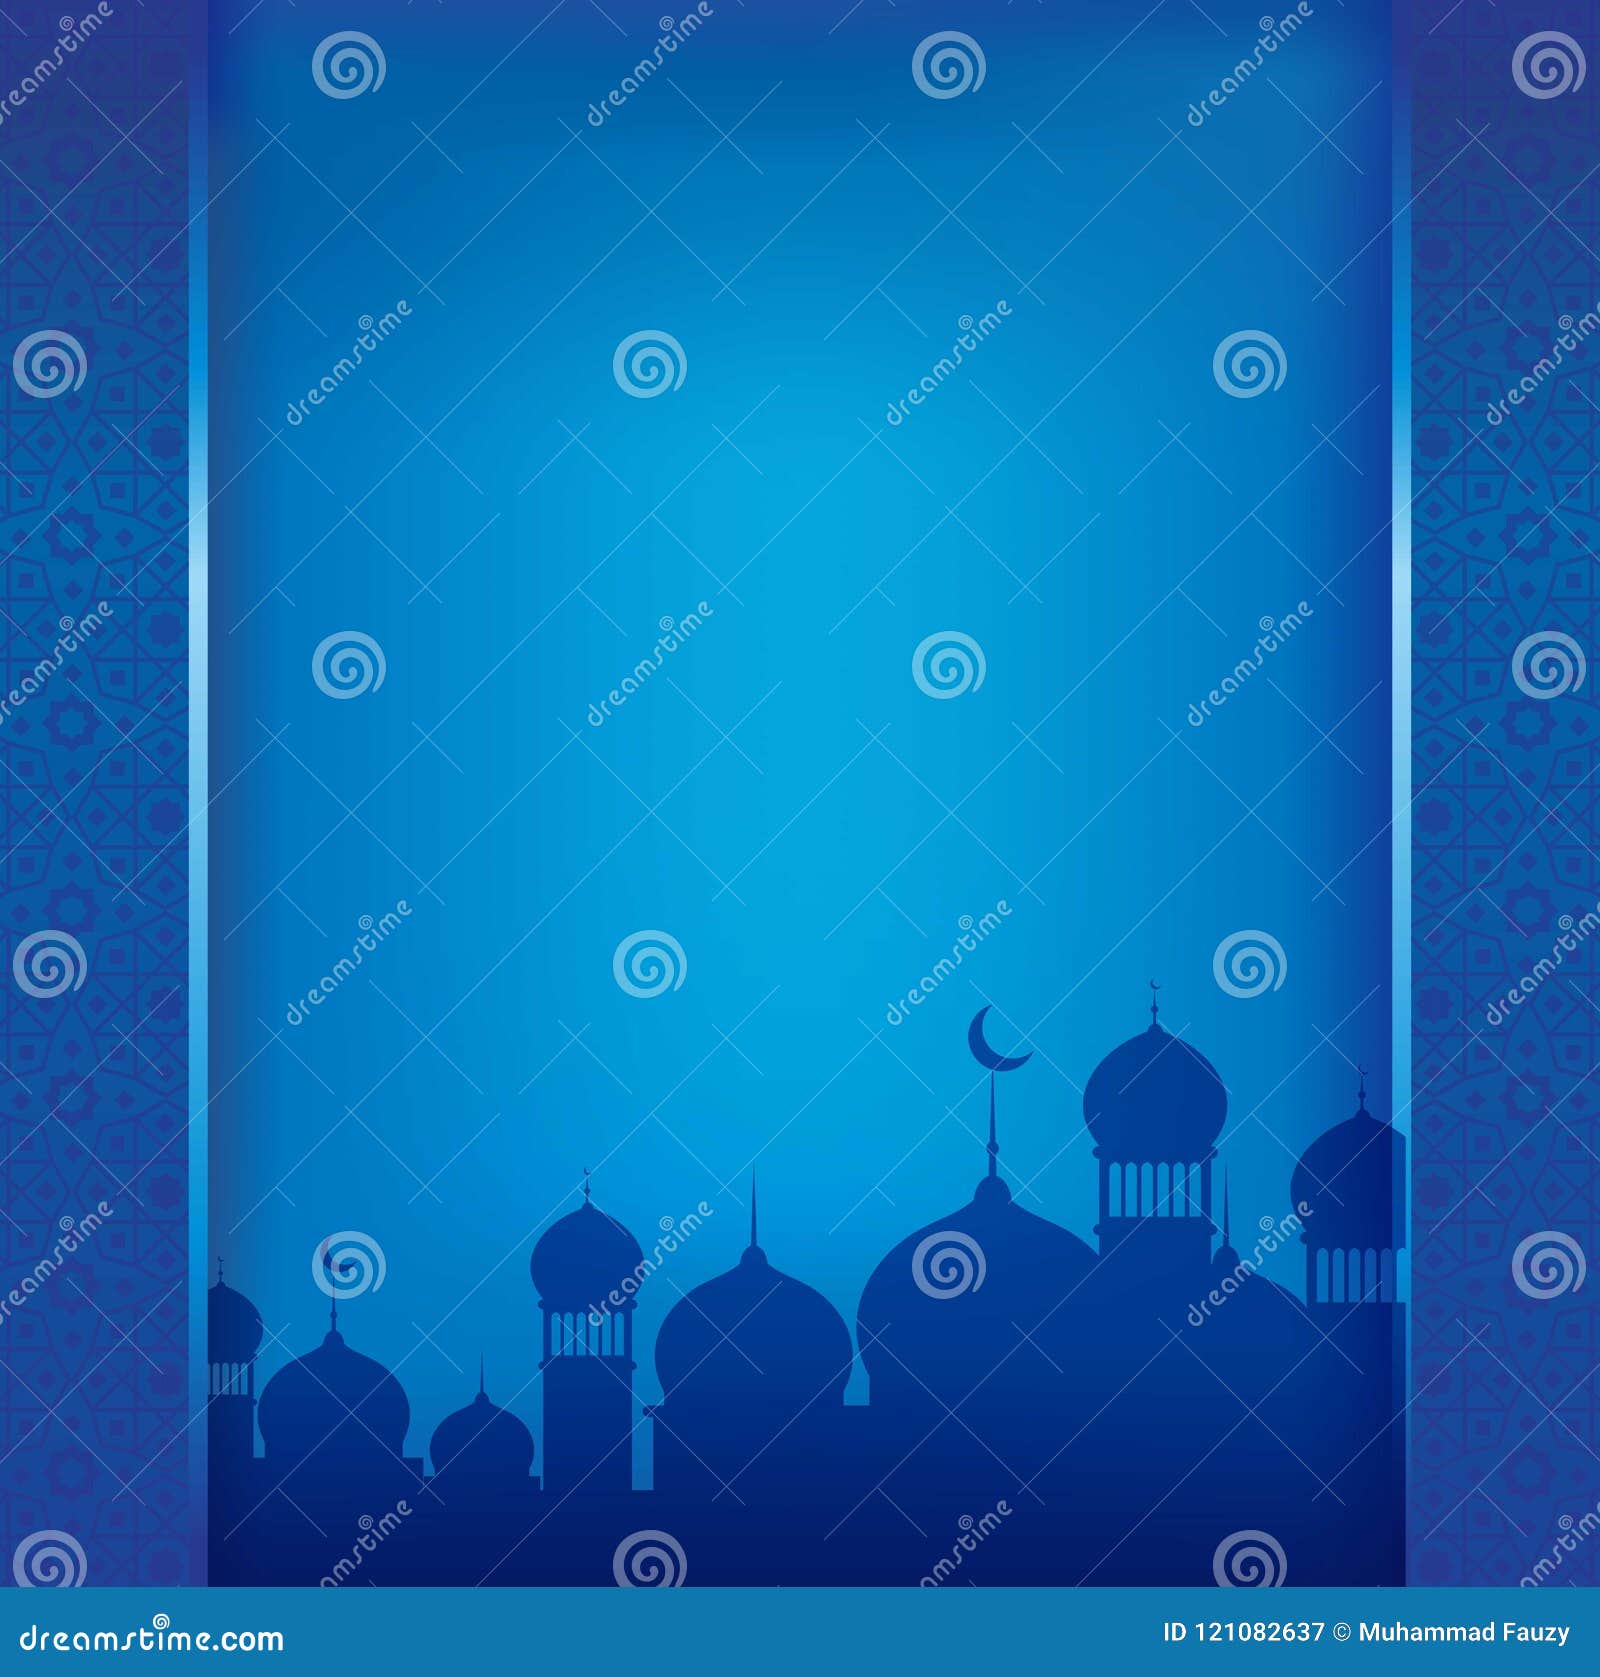 Wallpaper islamic